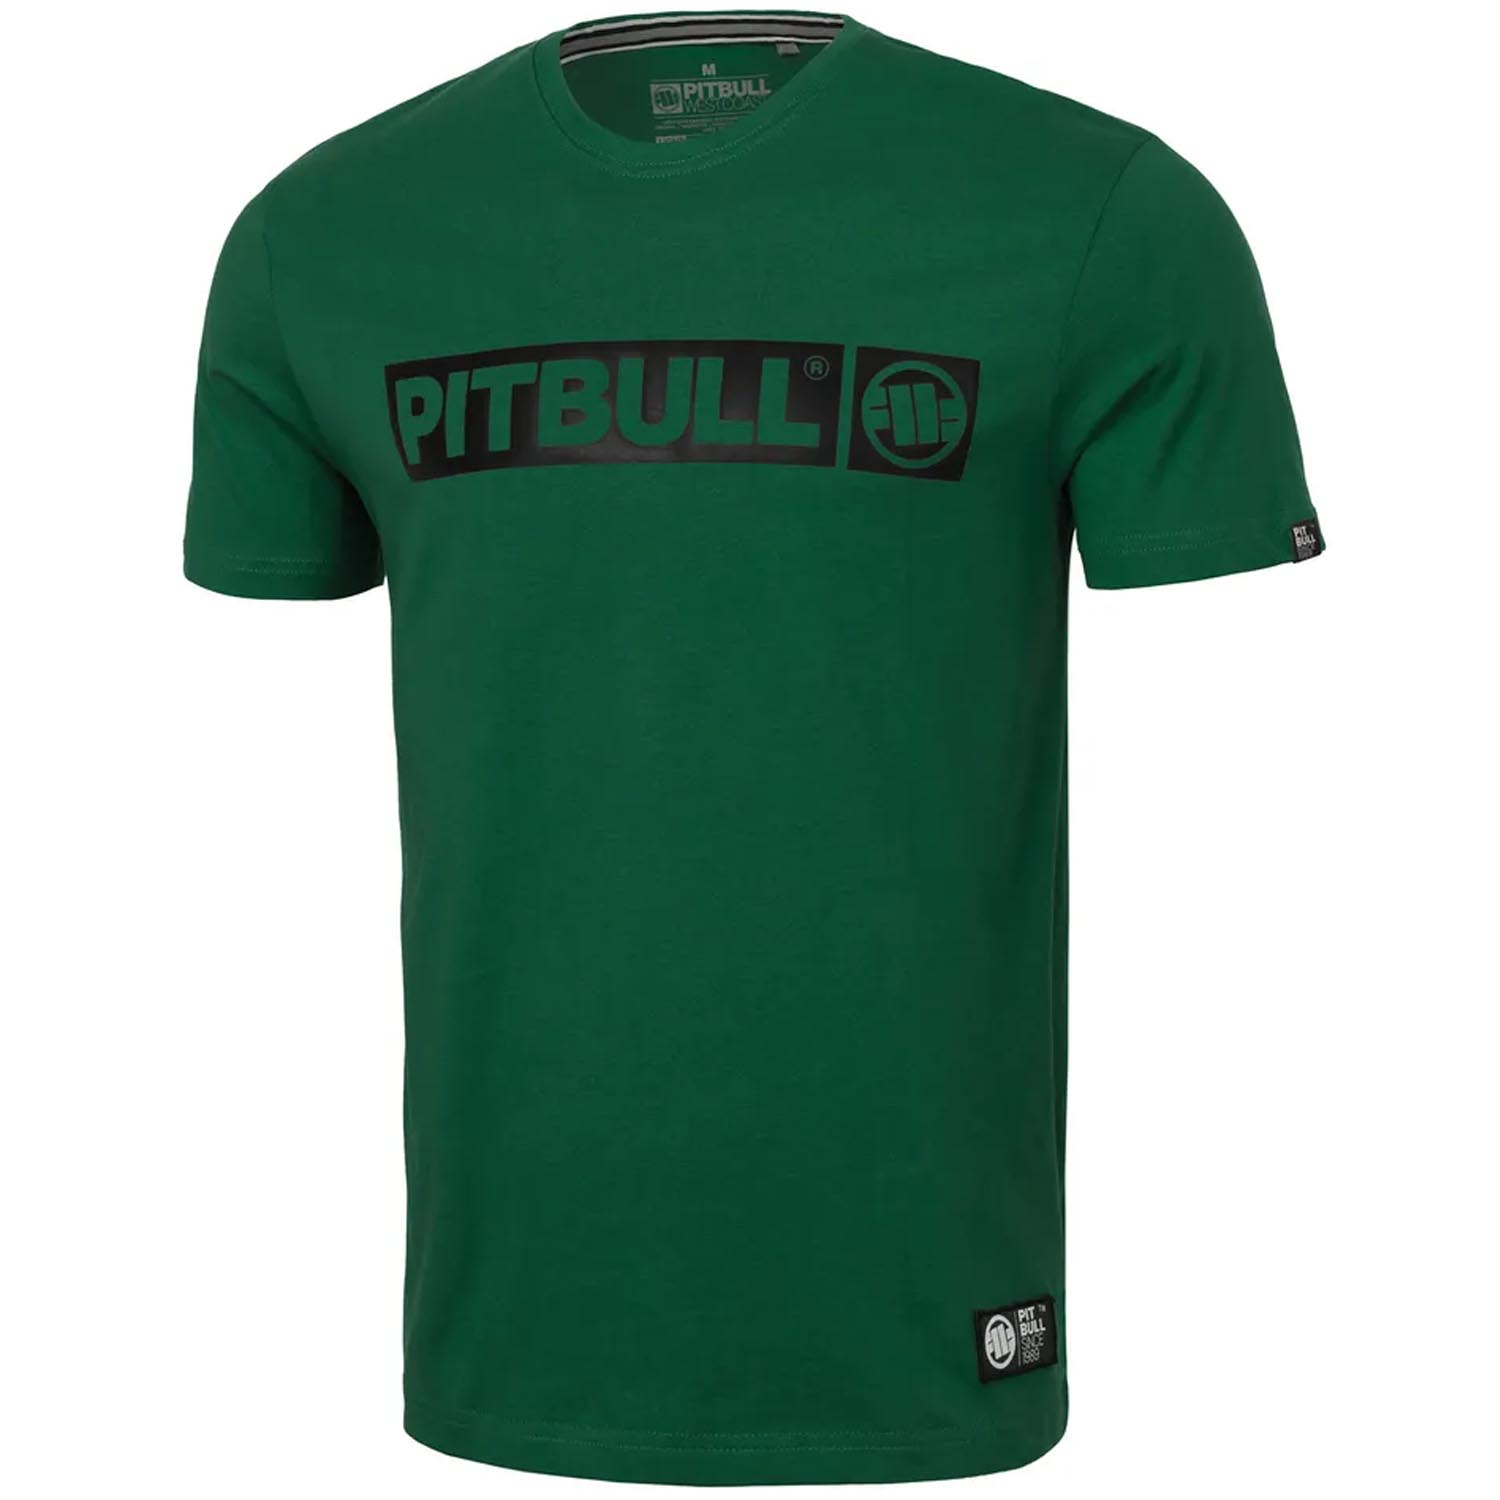 Pit Bull West Coast T-Shirt, Hilltop S70, blattgrün